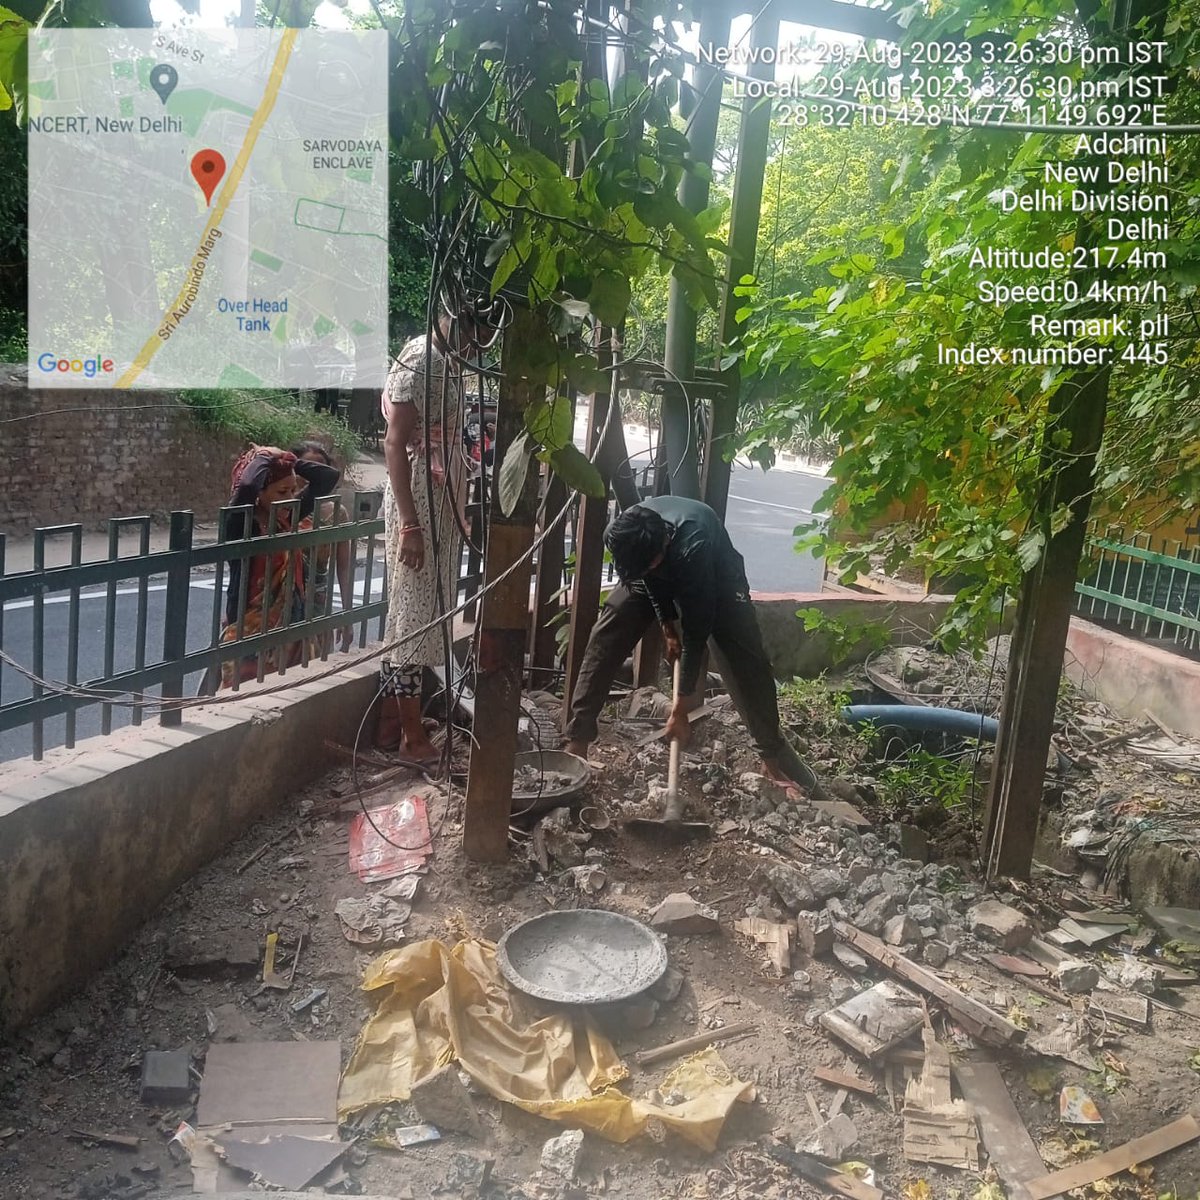 Cleaning of Kerb channels at Ansari Nagar Ring Road by #PWDDelhi for G20Preperations #PWDDelhiG20Summit #G20Summit #G20PublicWorksDept @LtGovDelhi @MoHUA_India @AtishiAAP @CMODelhi @Shashanka_IAS